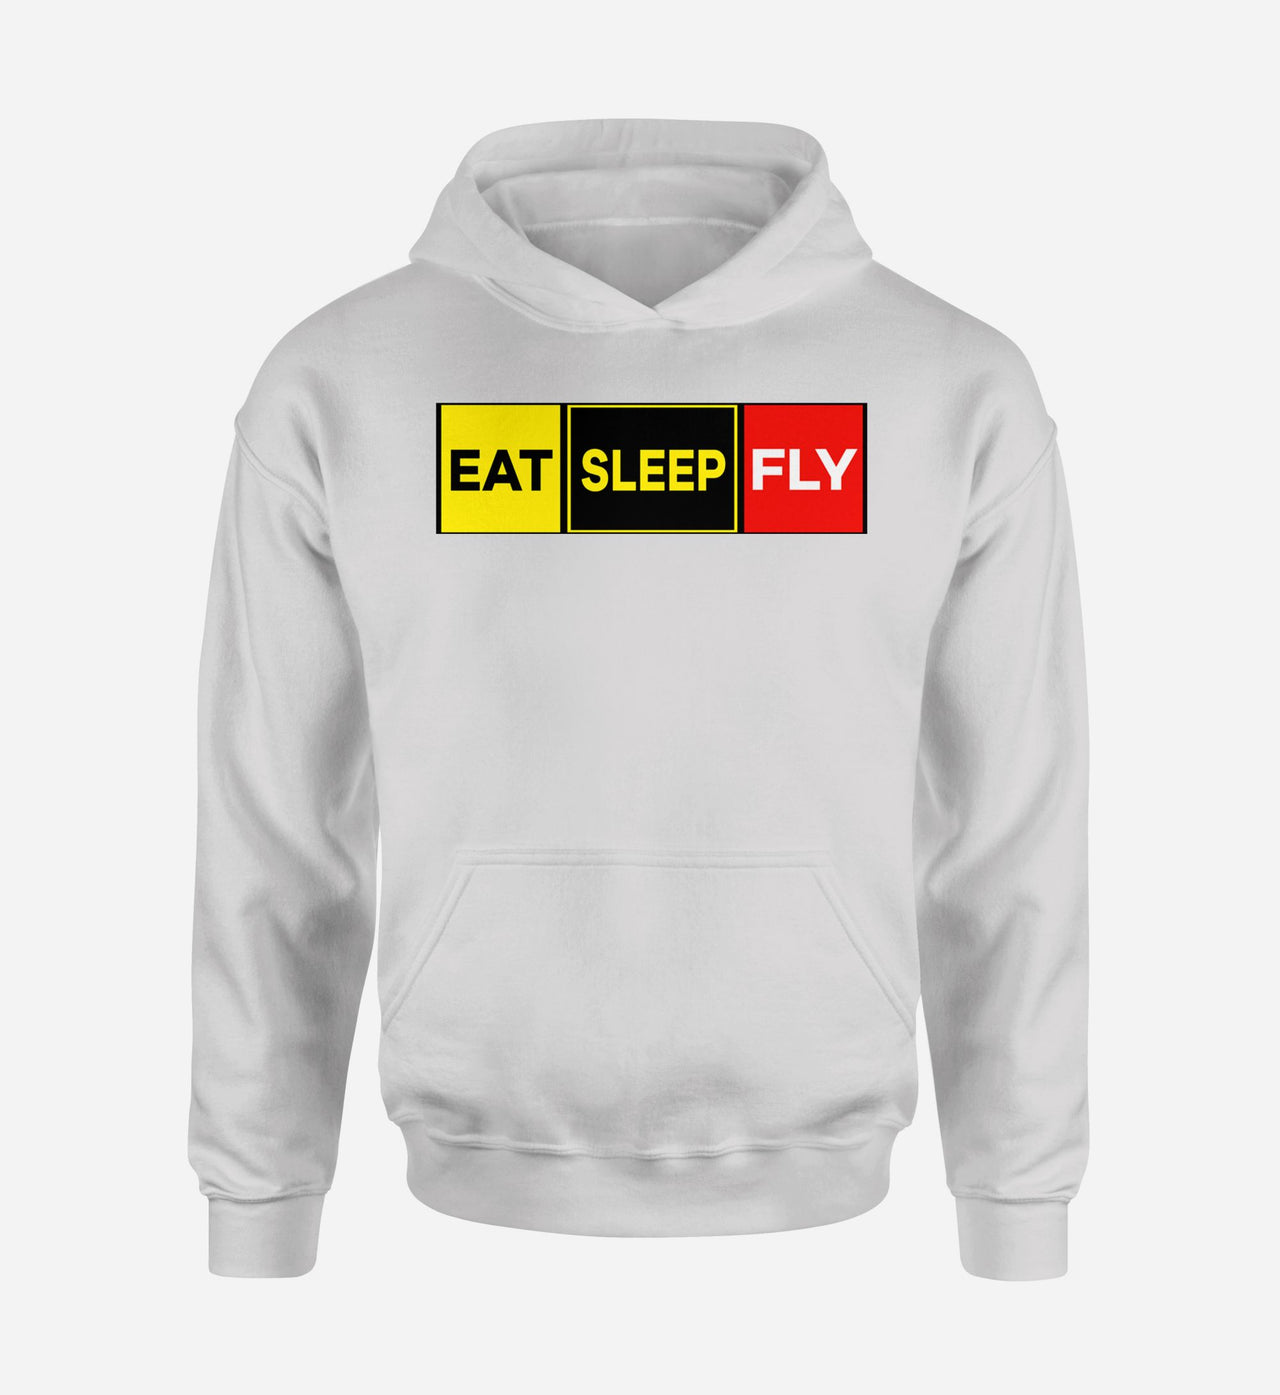 Eat Sleep Fly (Colourful) Designed Hoodies